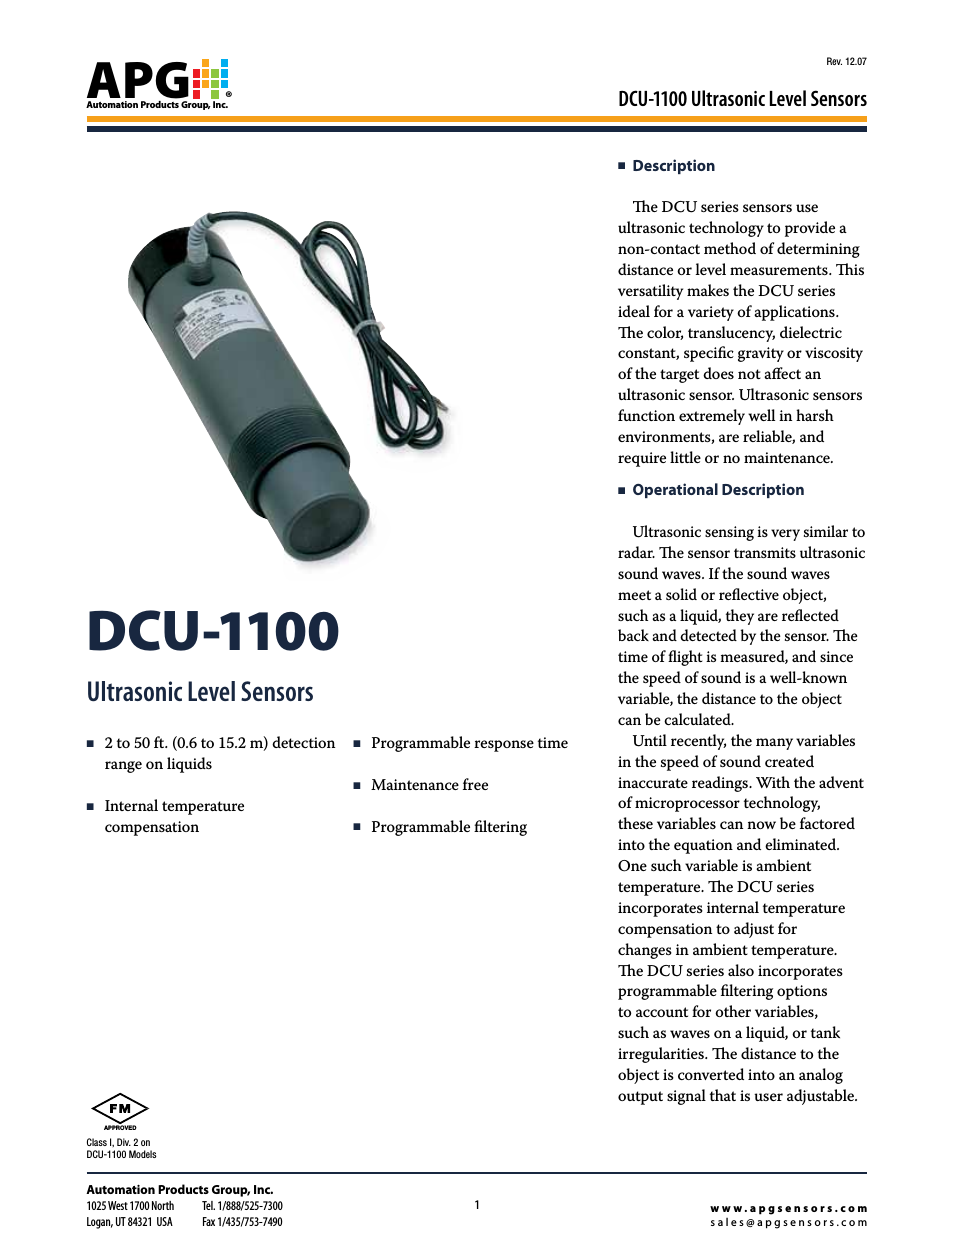 DCU-1100 datasheet